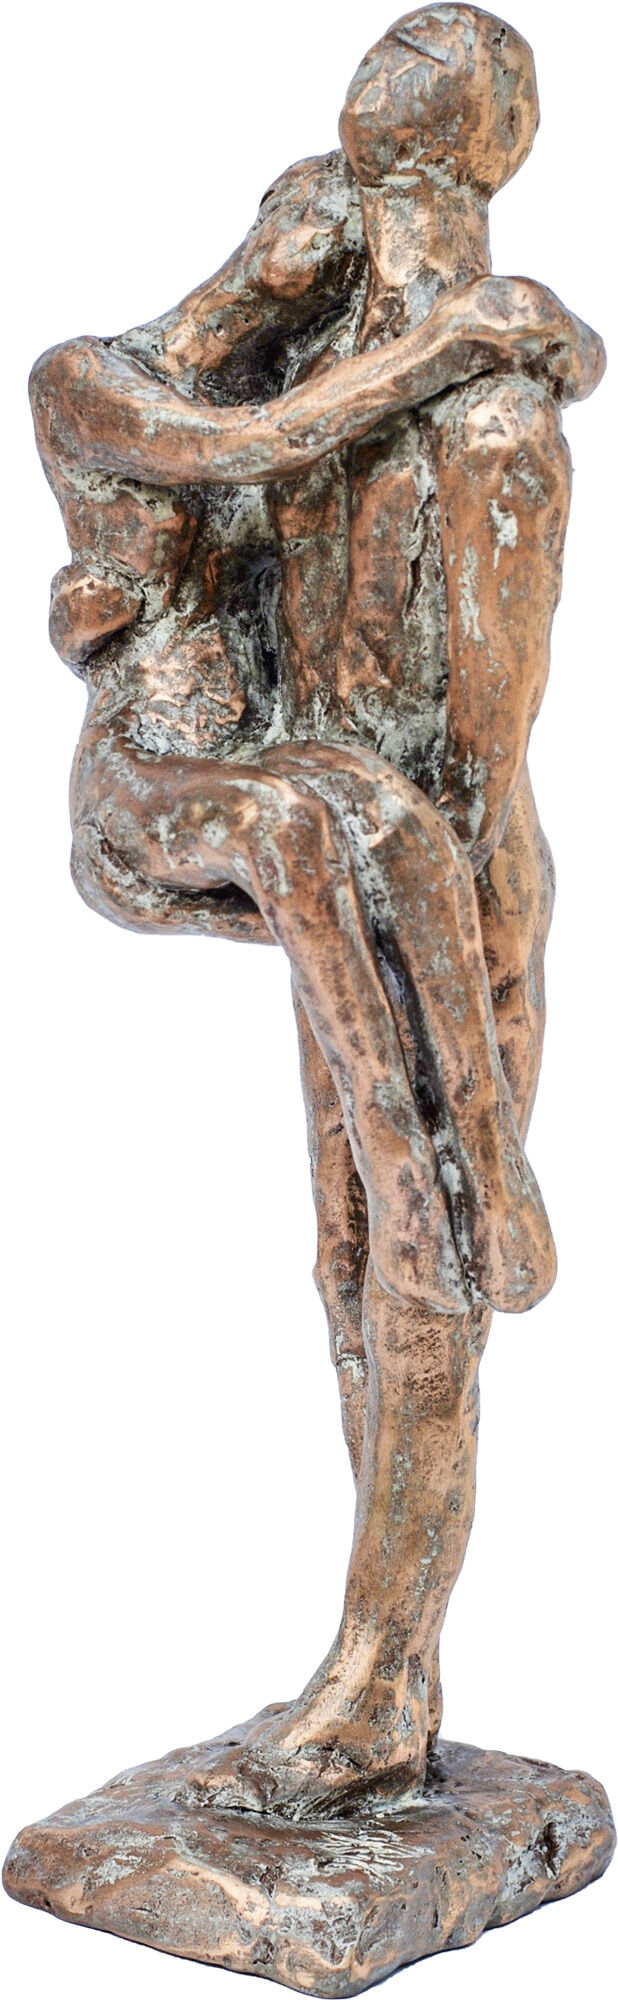 Sculpture "Pina - Reconciliation" (2019), bronze by Dagmar Vogt